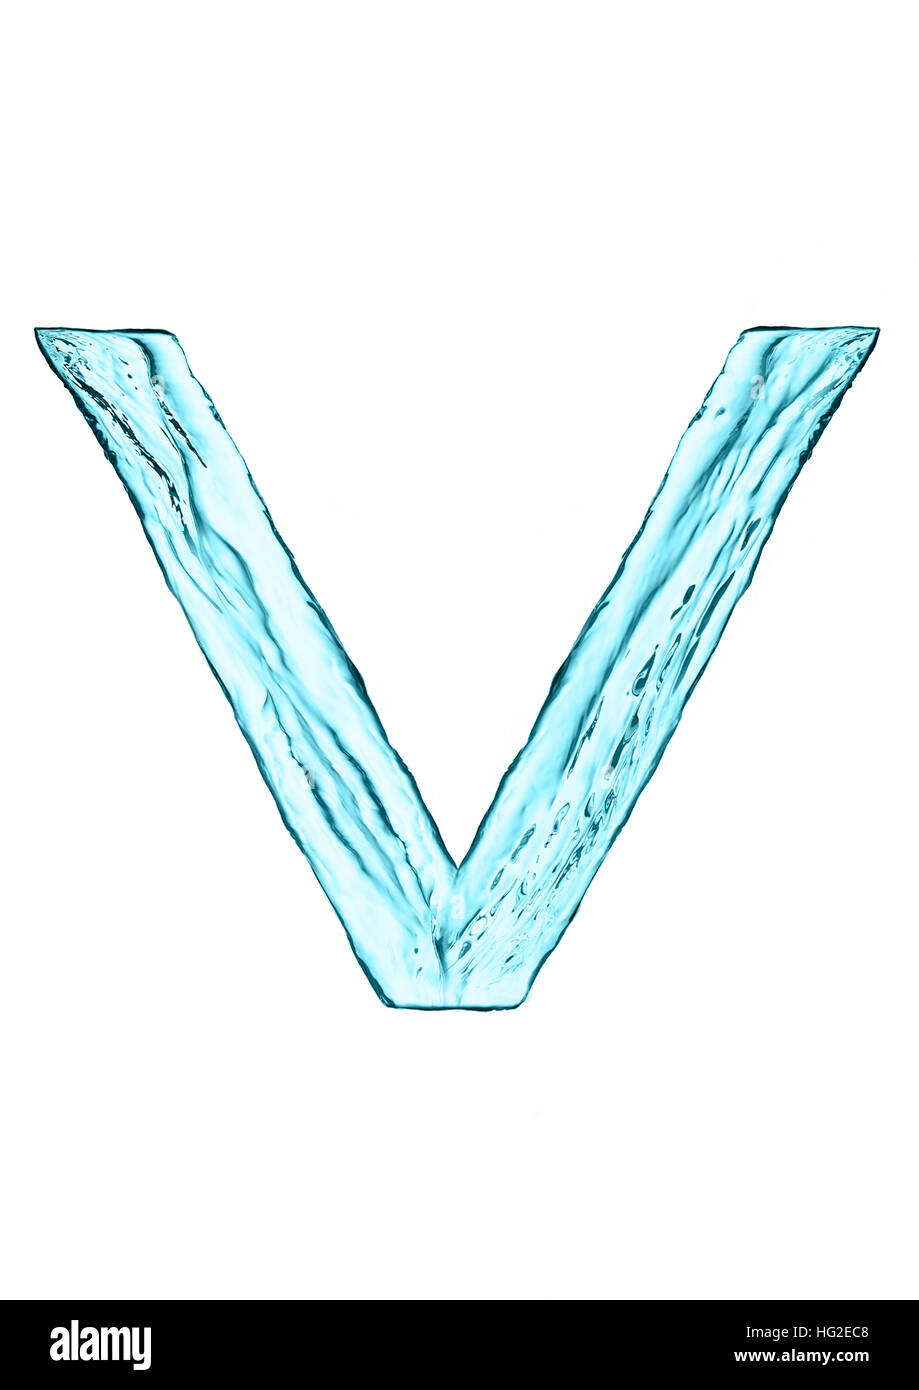 Water Splash Letter V With Light Blue Color On White Background Stock Photo Alamy